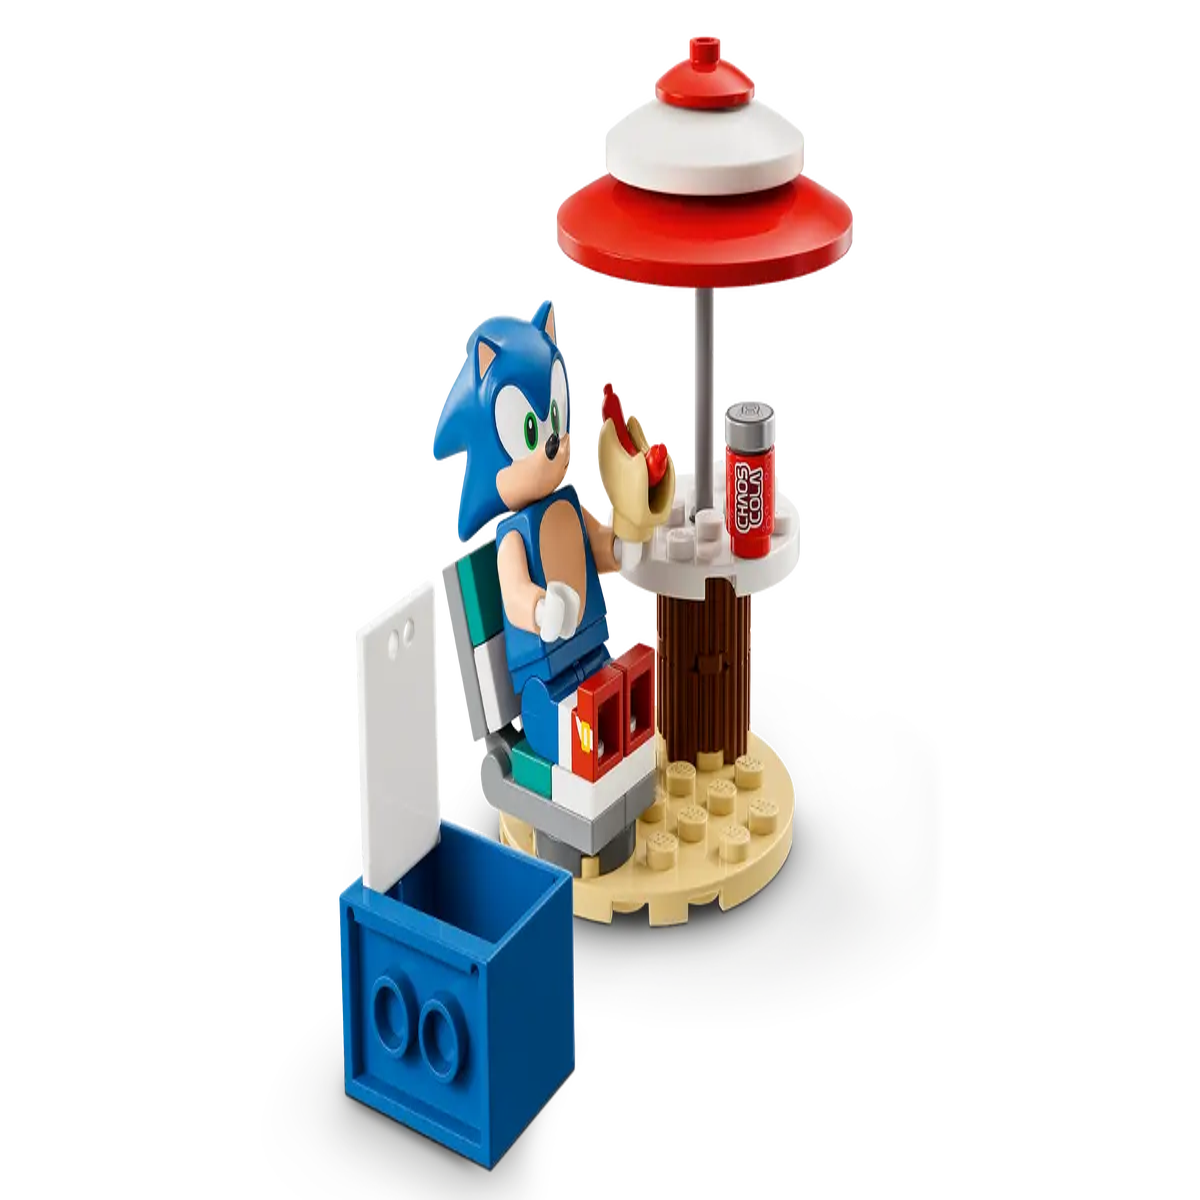 LEGO minifigures Amy Rose